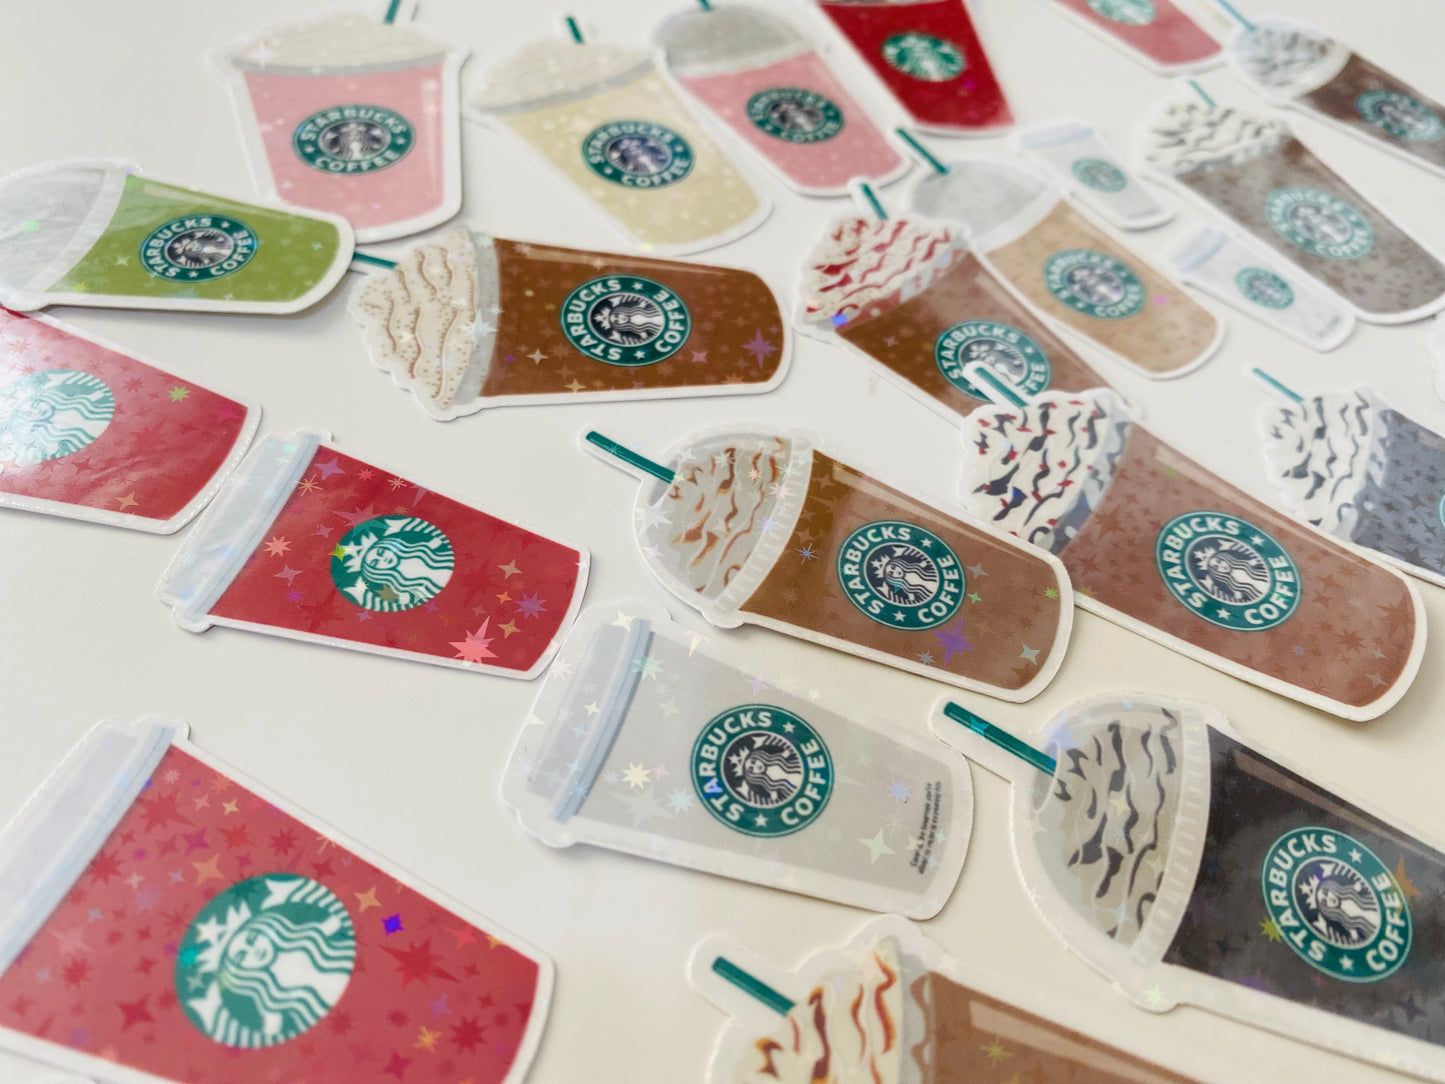 Tiny Stickers - Starbucks Coffee Cups